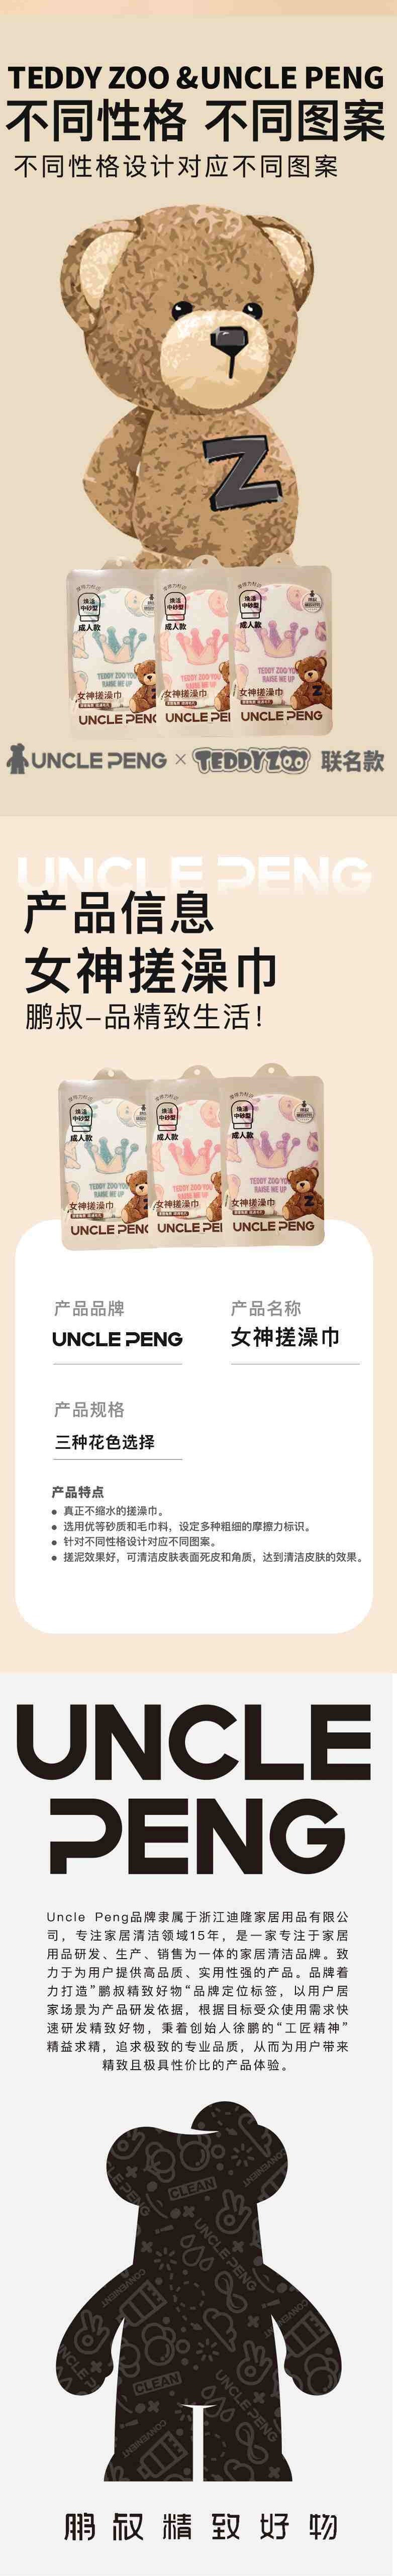 uncle peng 鹏叔搓澡套装